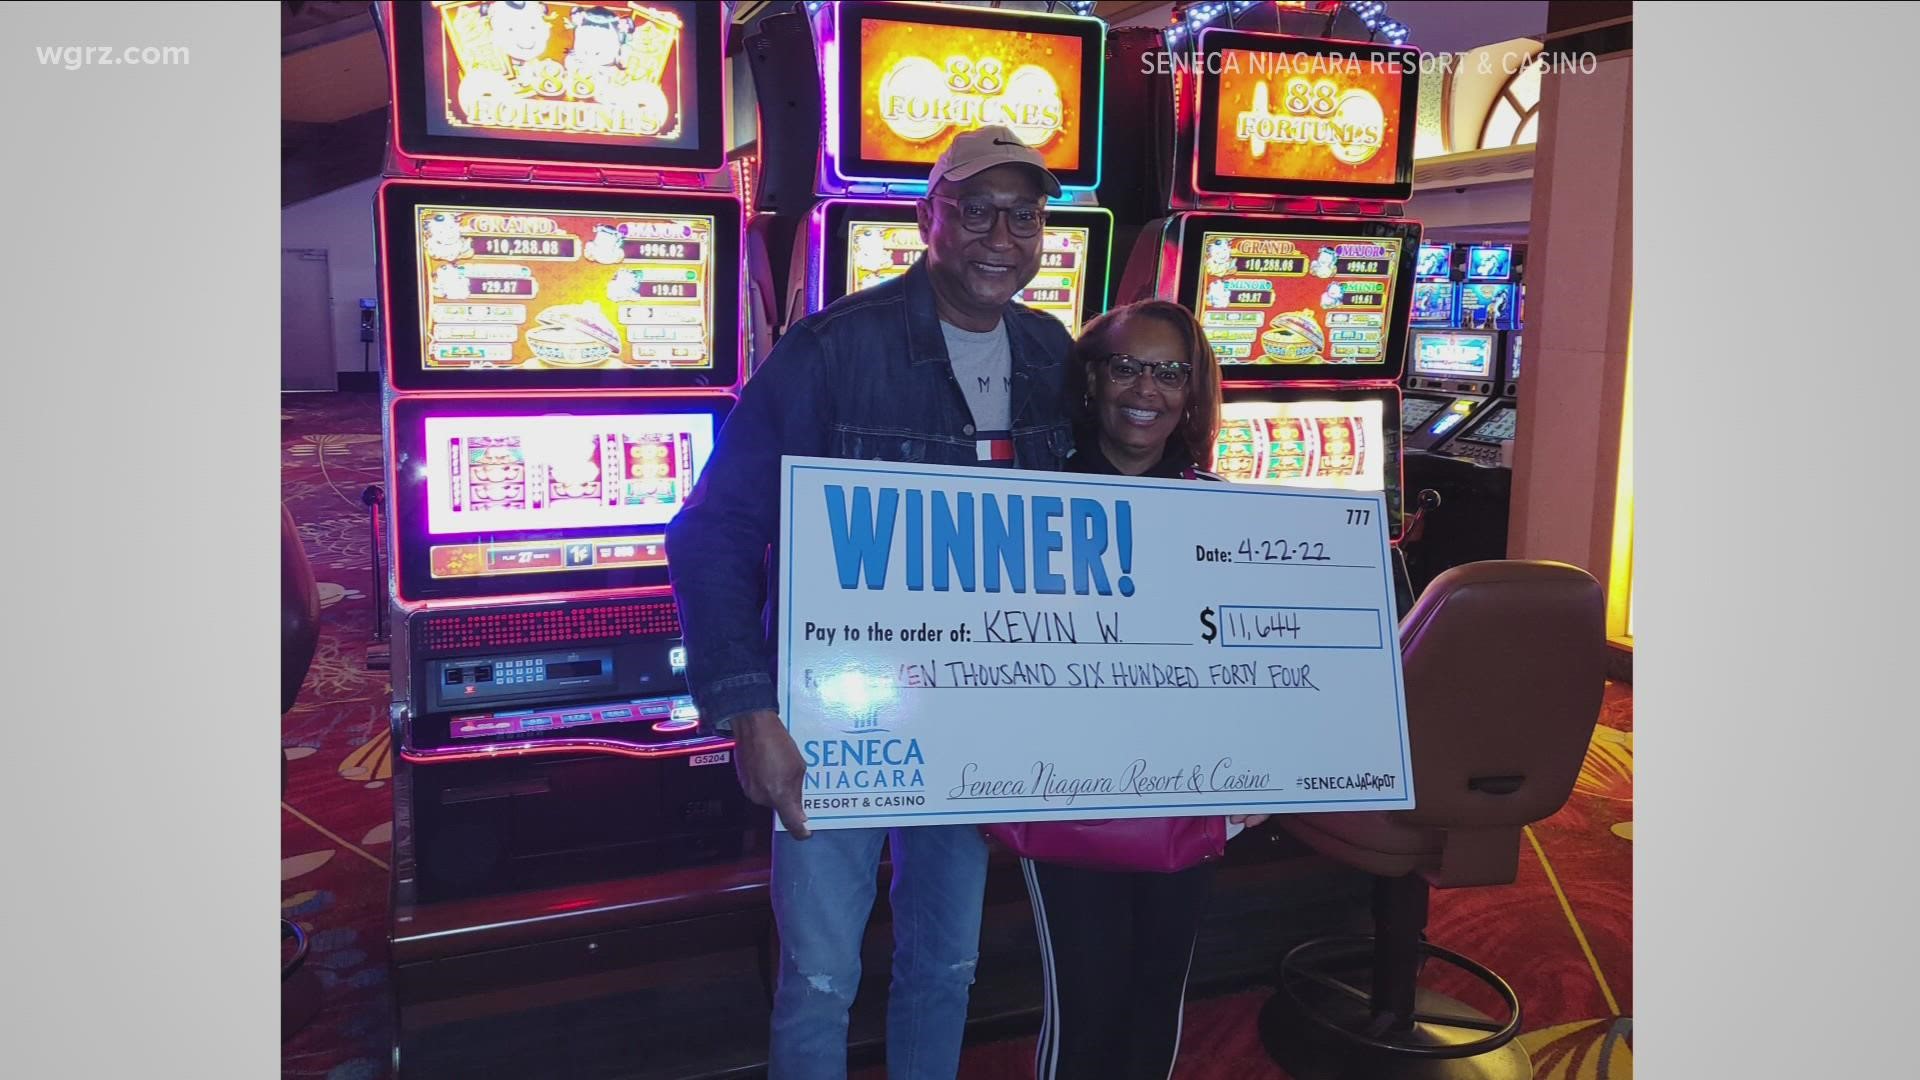 North Carolina man wins $11K in New York